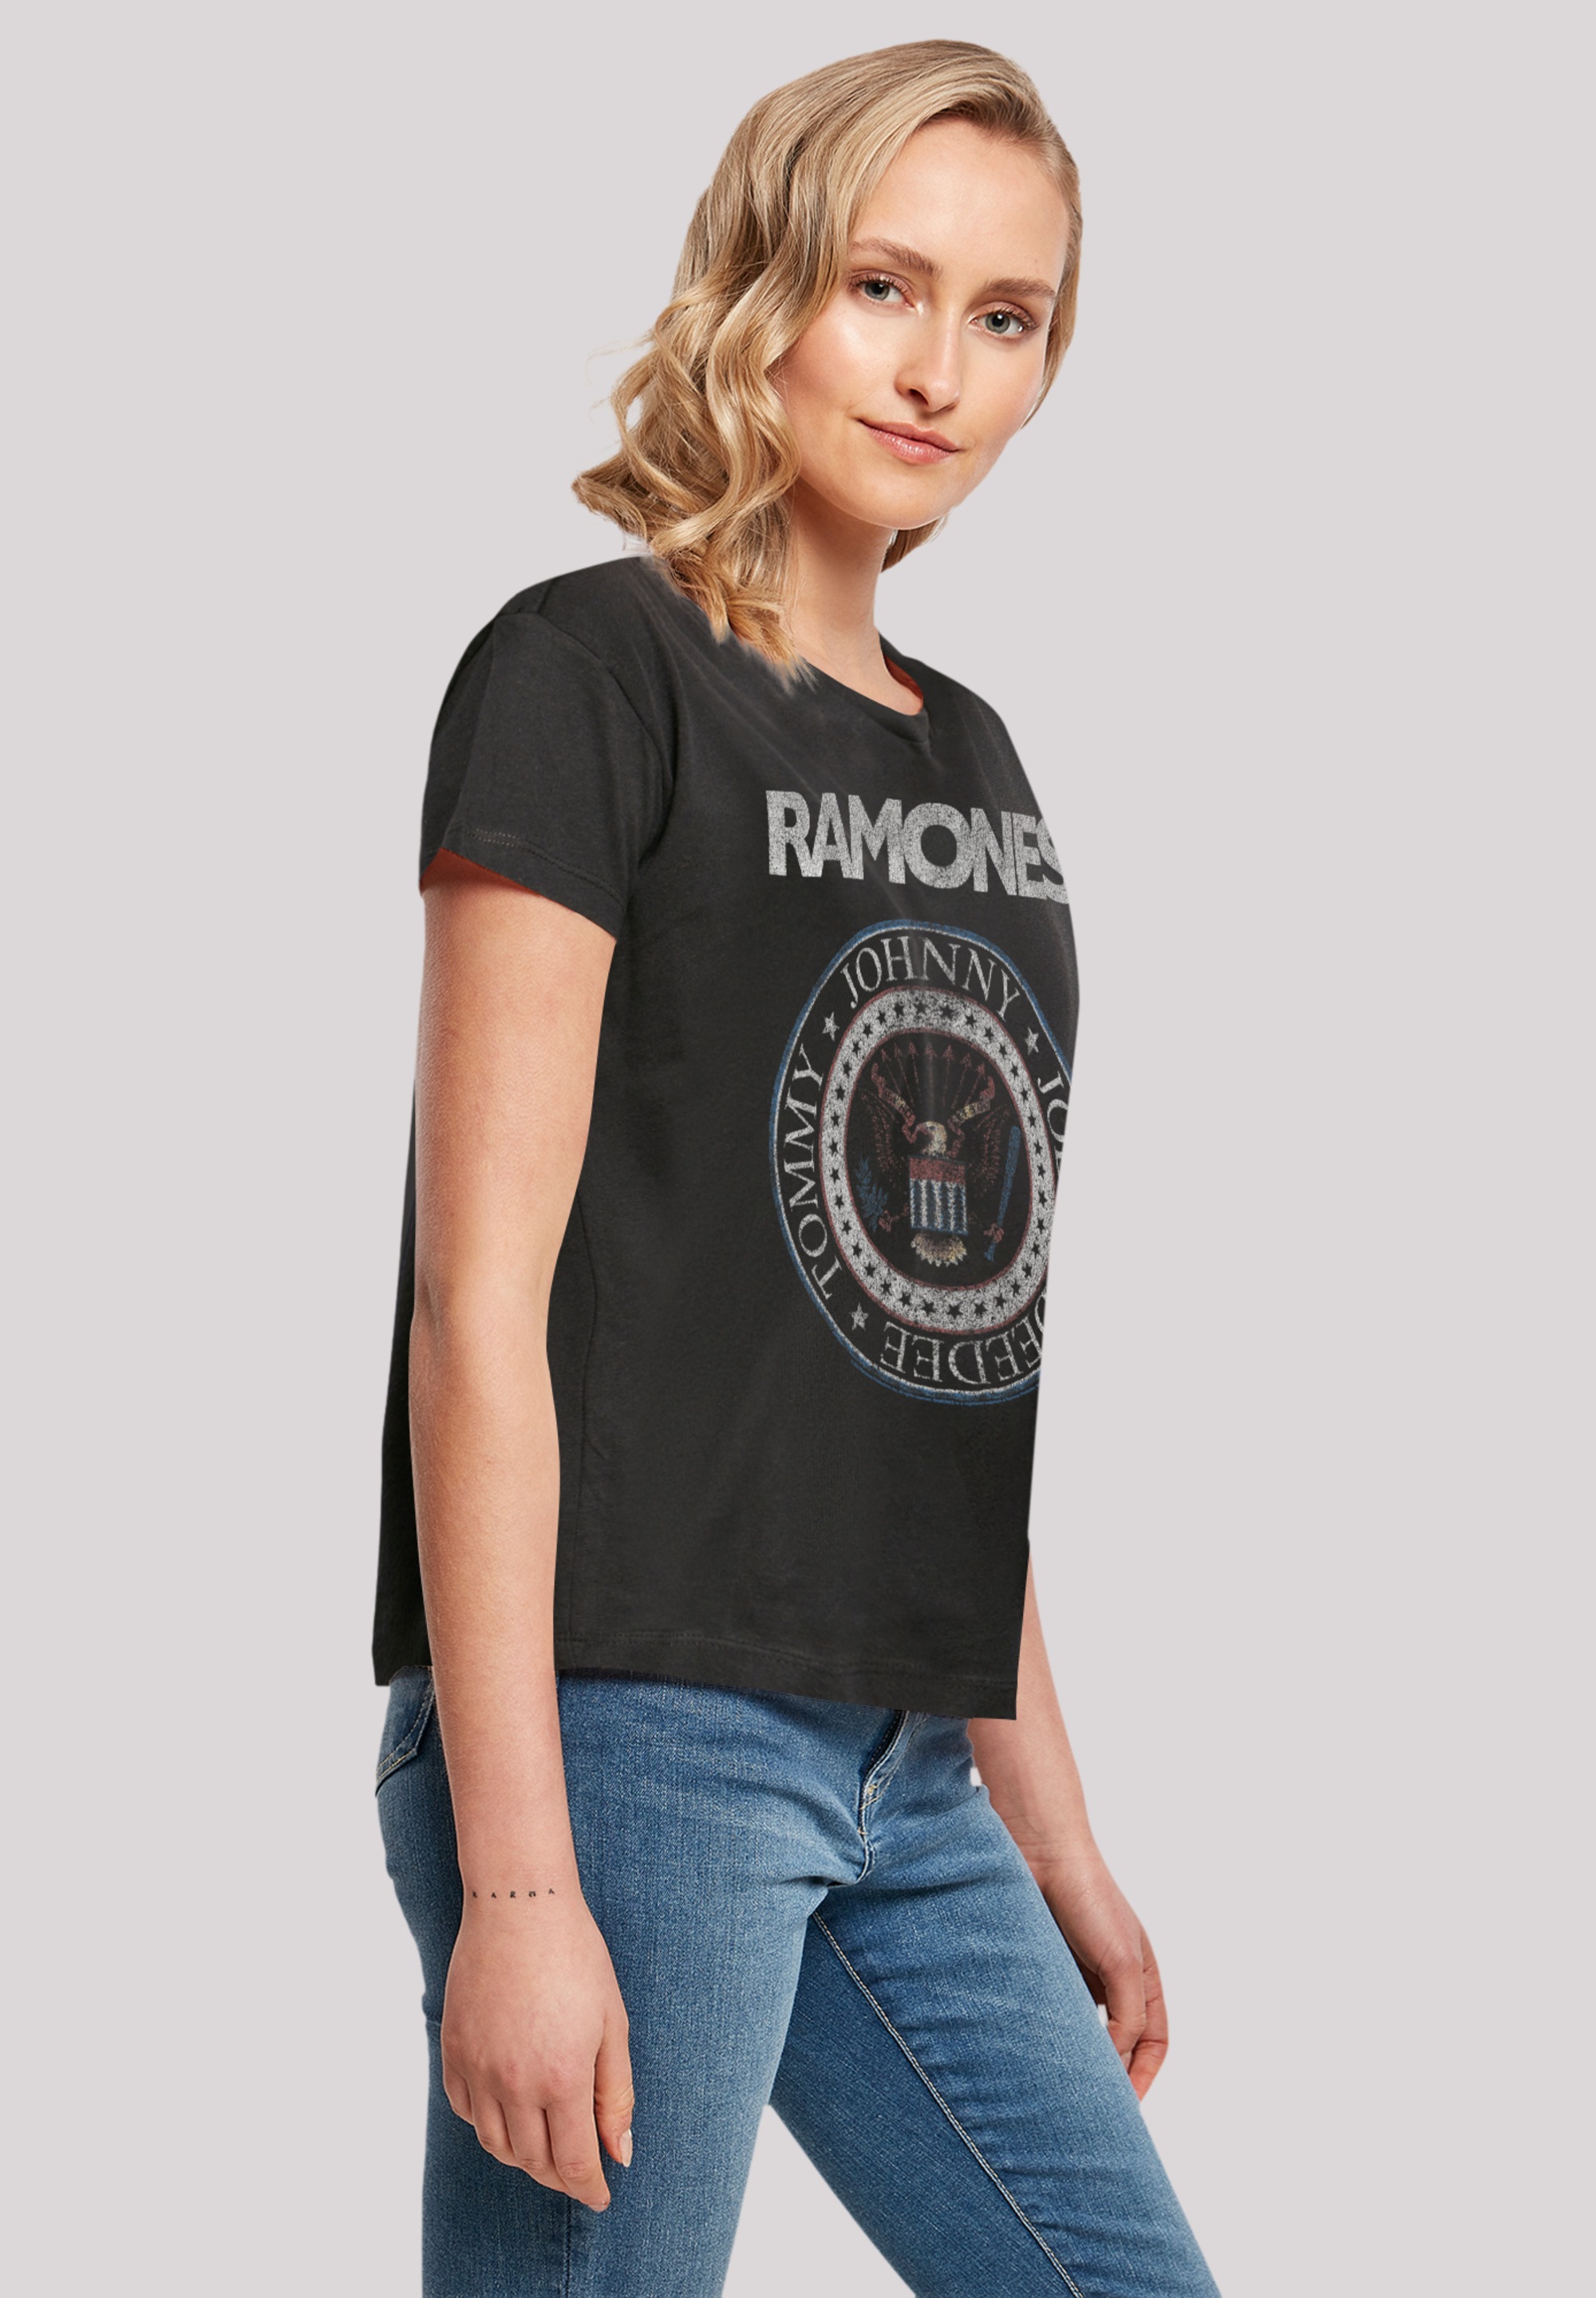 And Qualität, Rock Rock-Musik T-Shirt | F4NT4STIC Premium kaufen White Seal«, I\'m walking online Musik Band Band, Red »Ramones